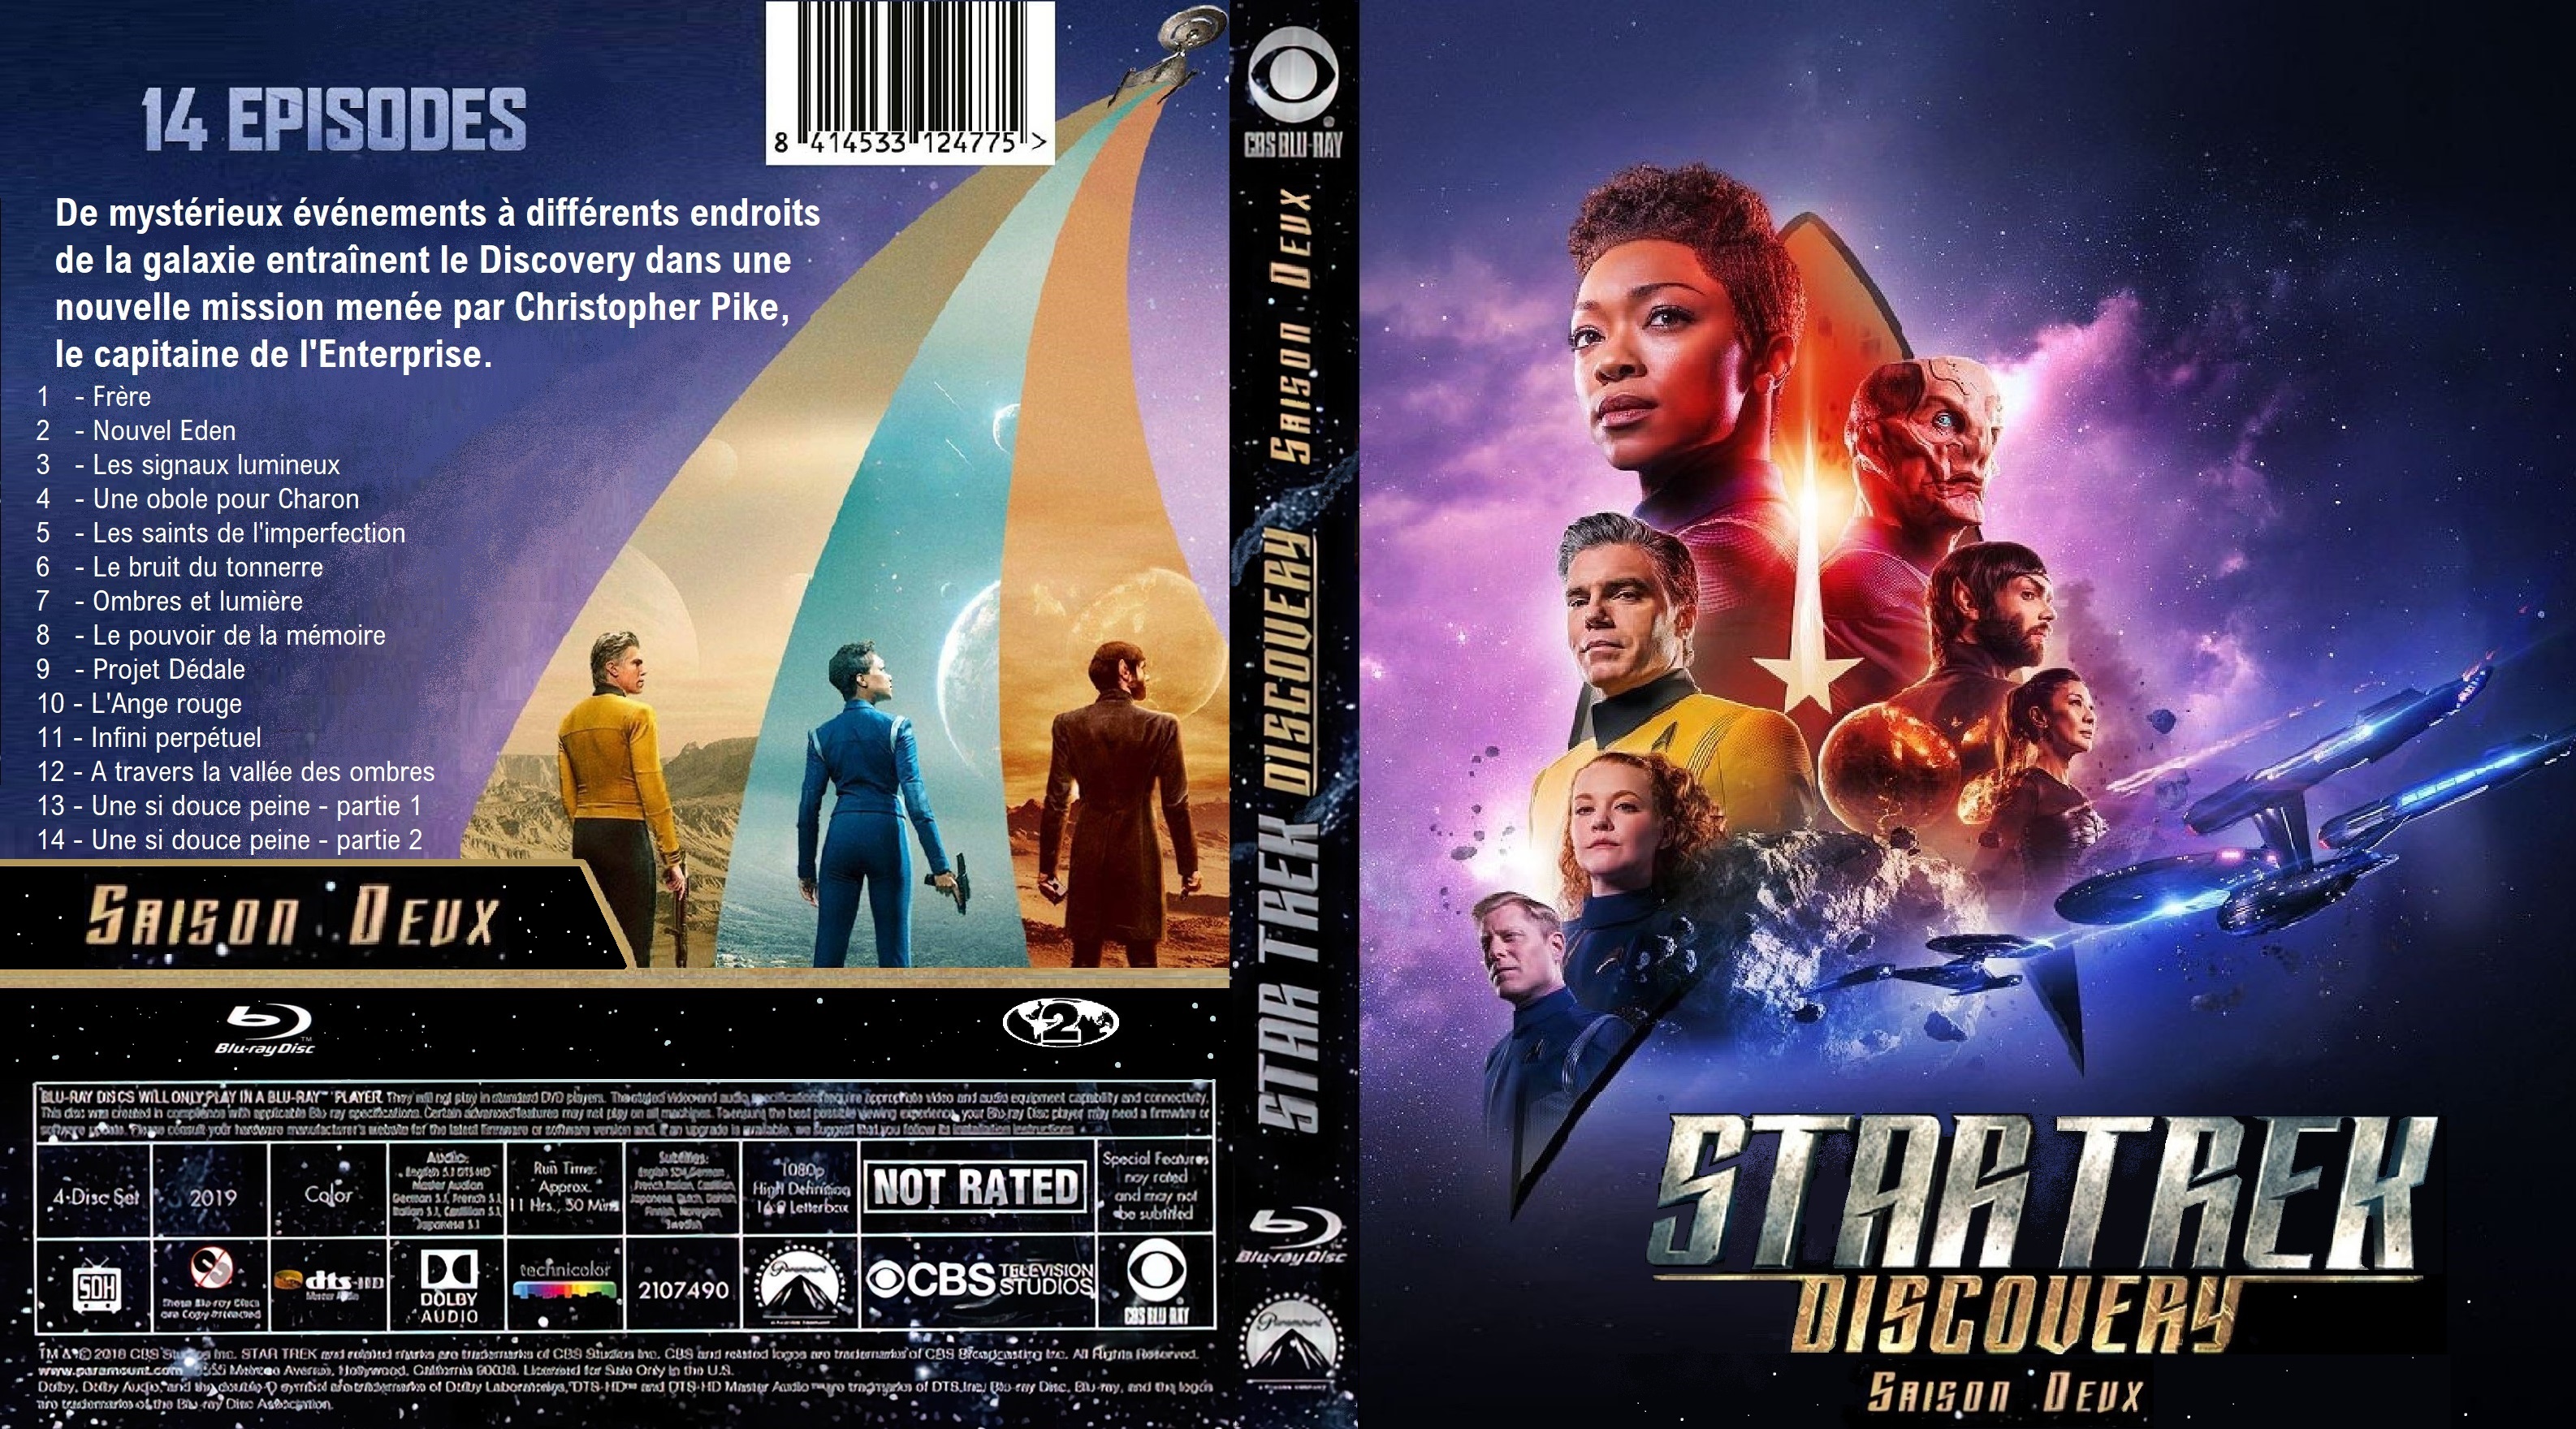 Jaquette DVD Star Trek Discovery Saison 2 Bluray custom